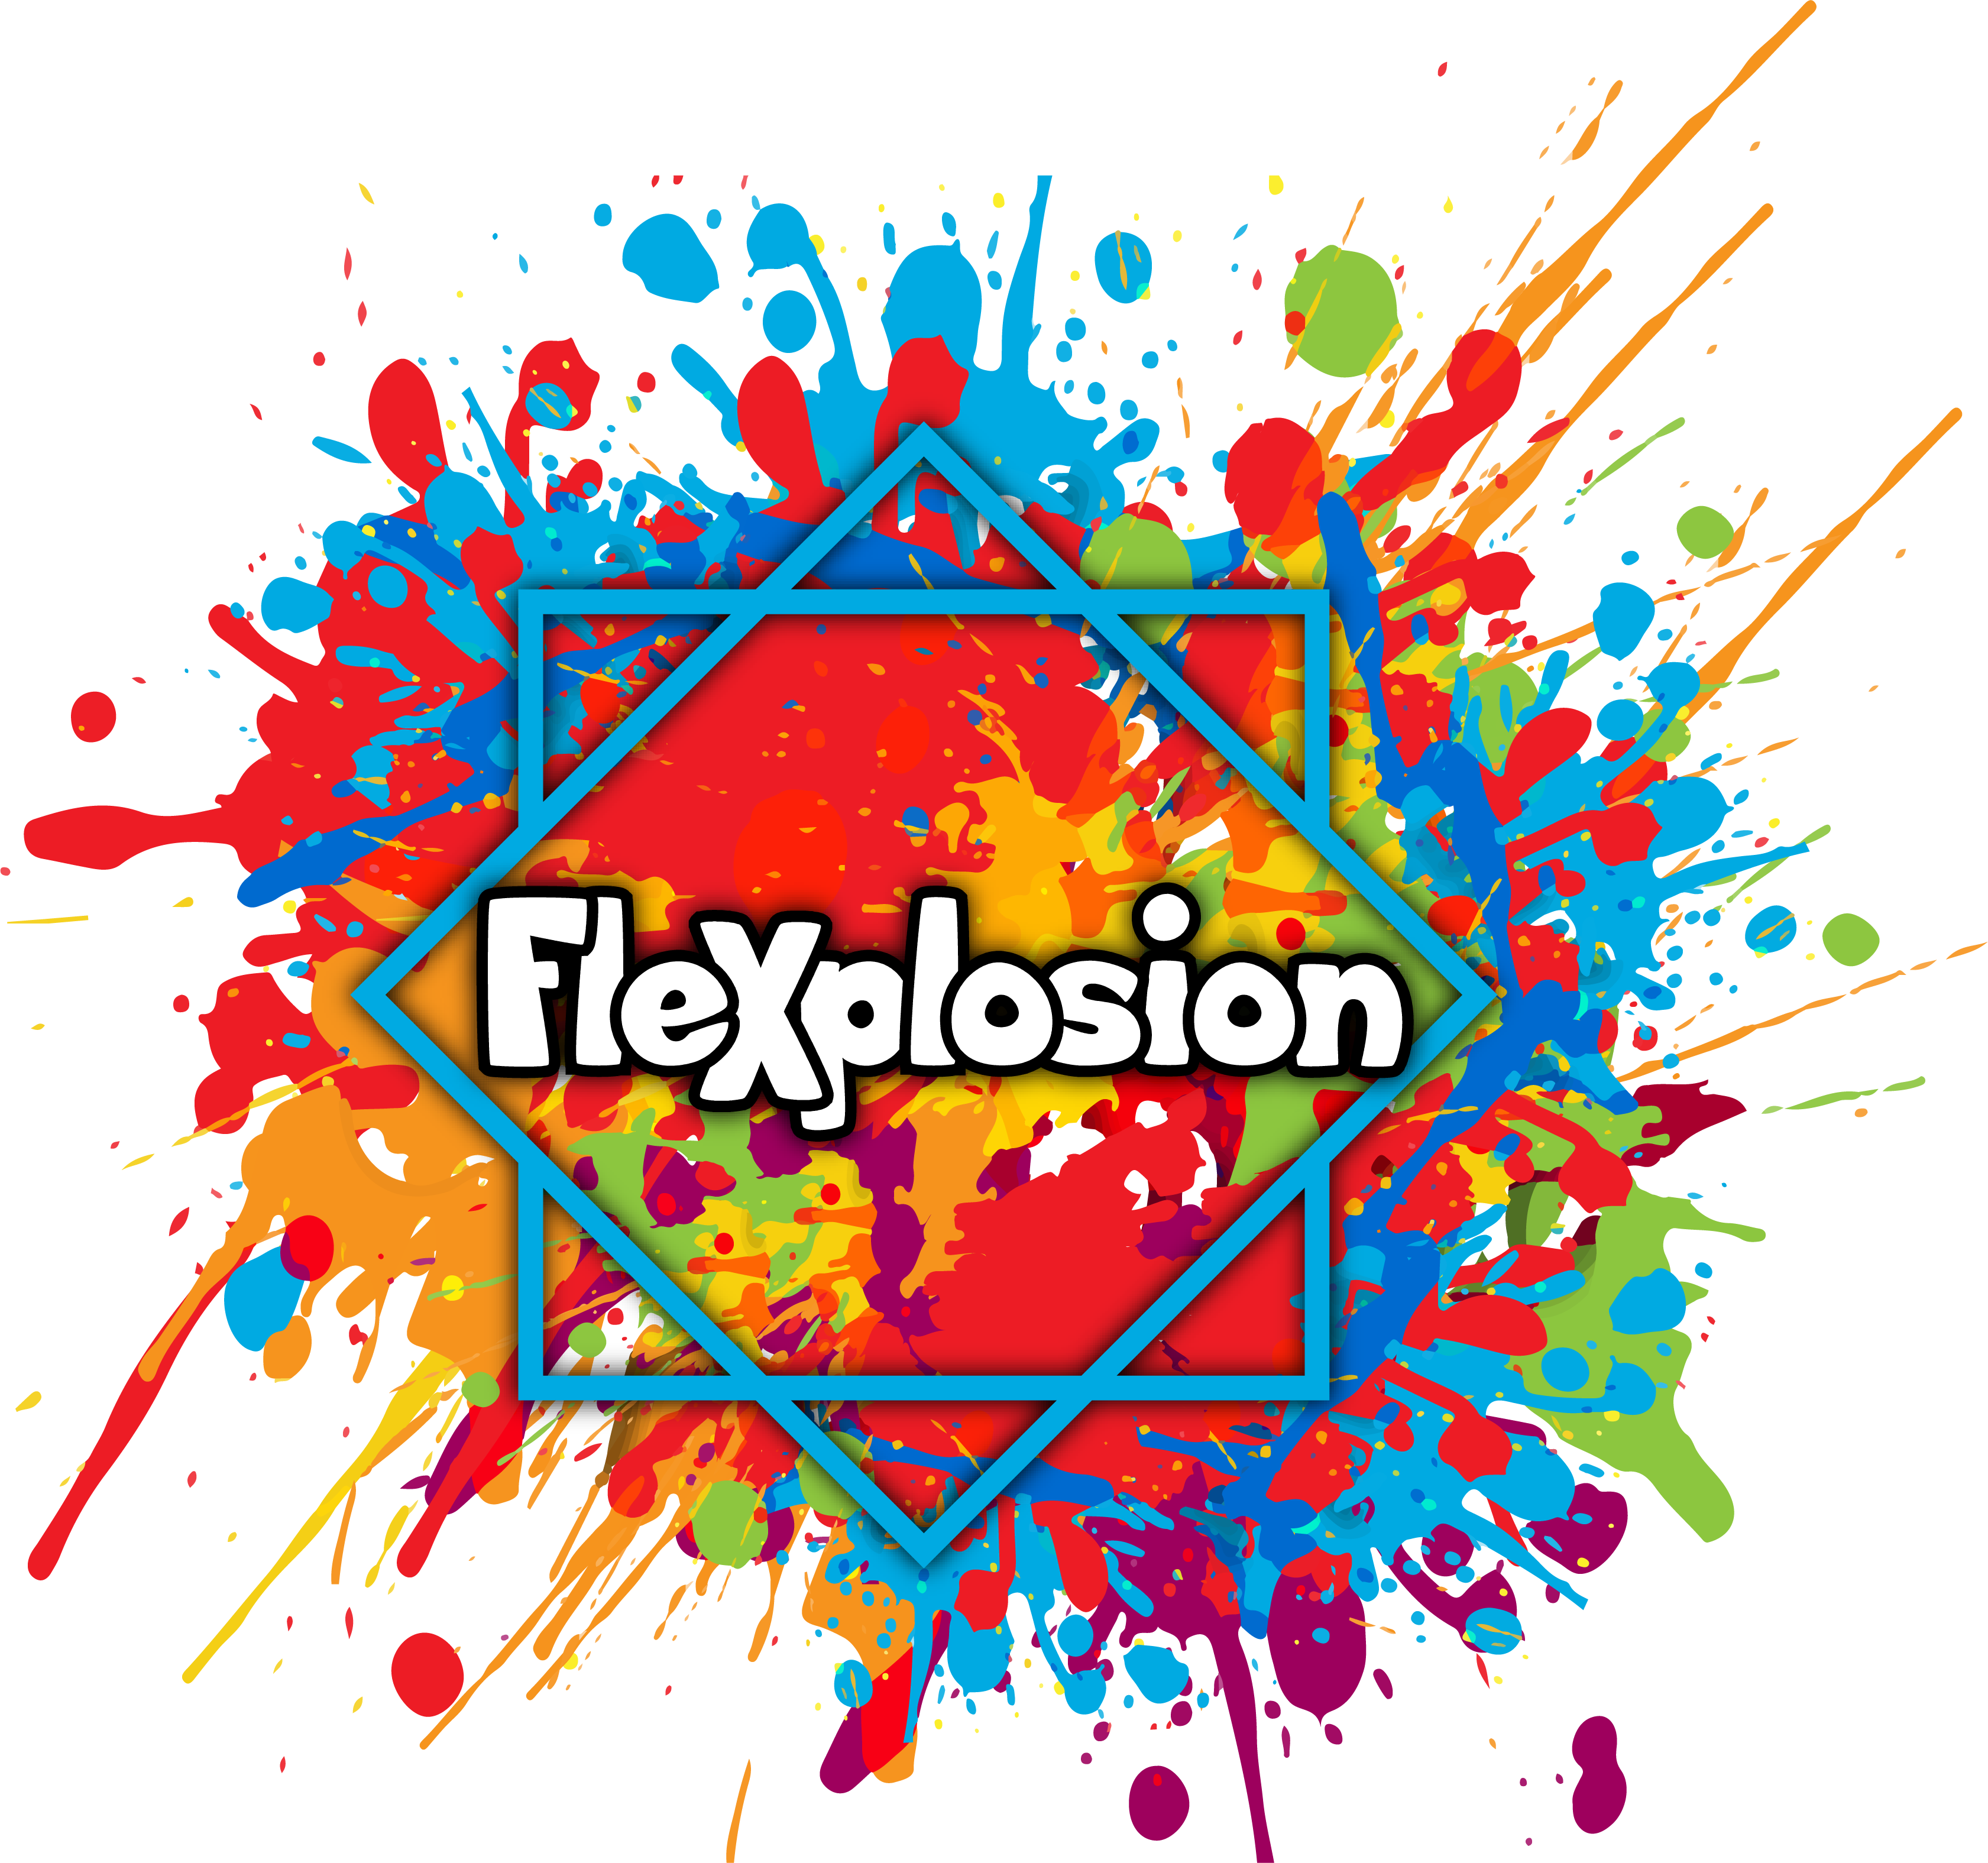 Flexplosion